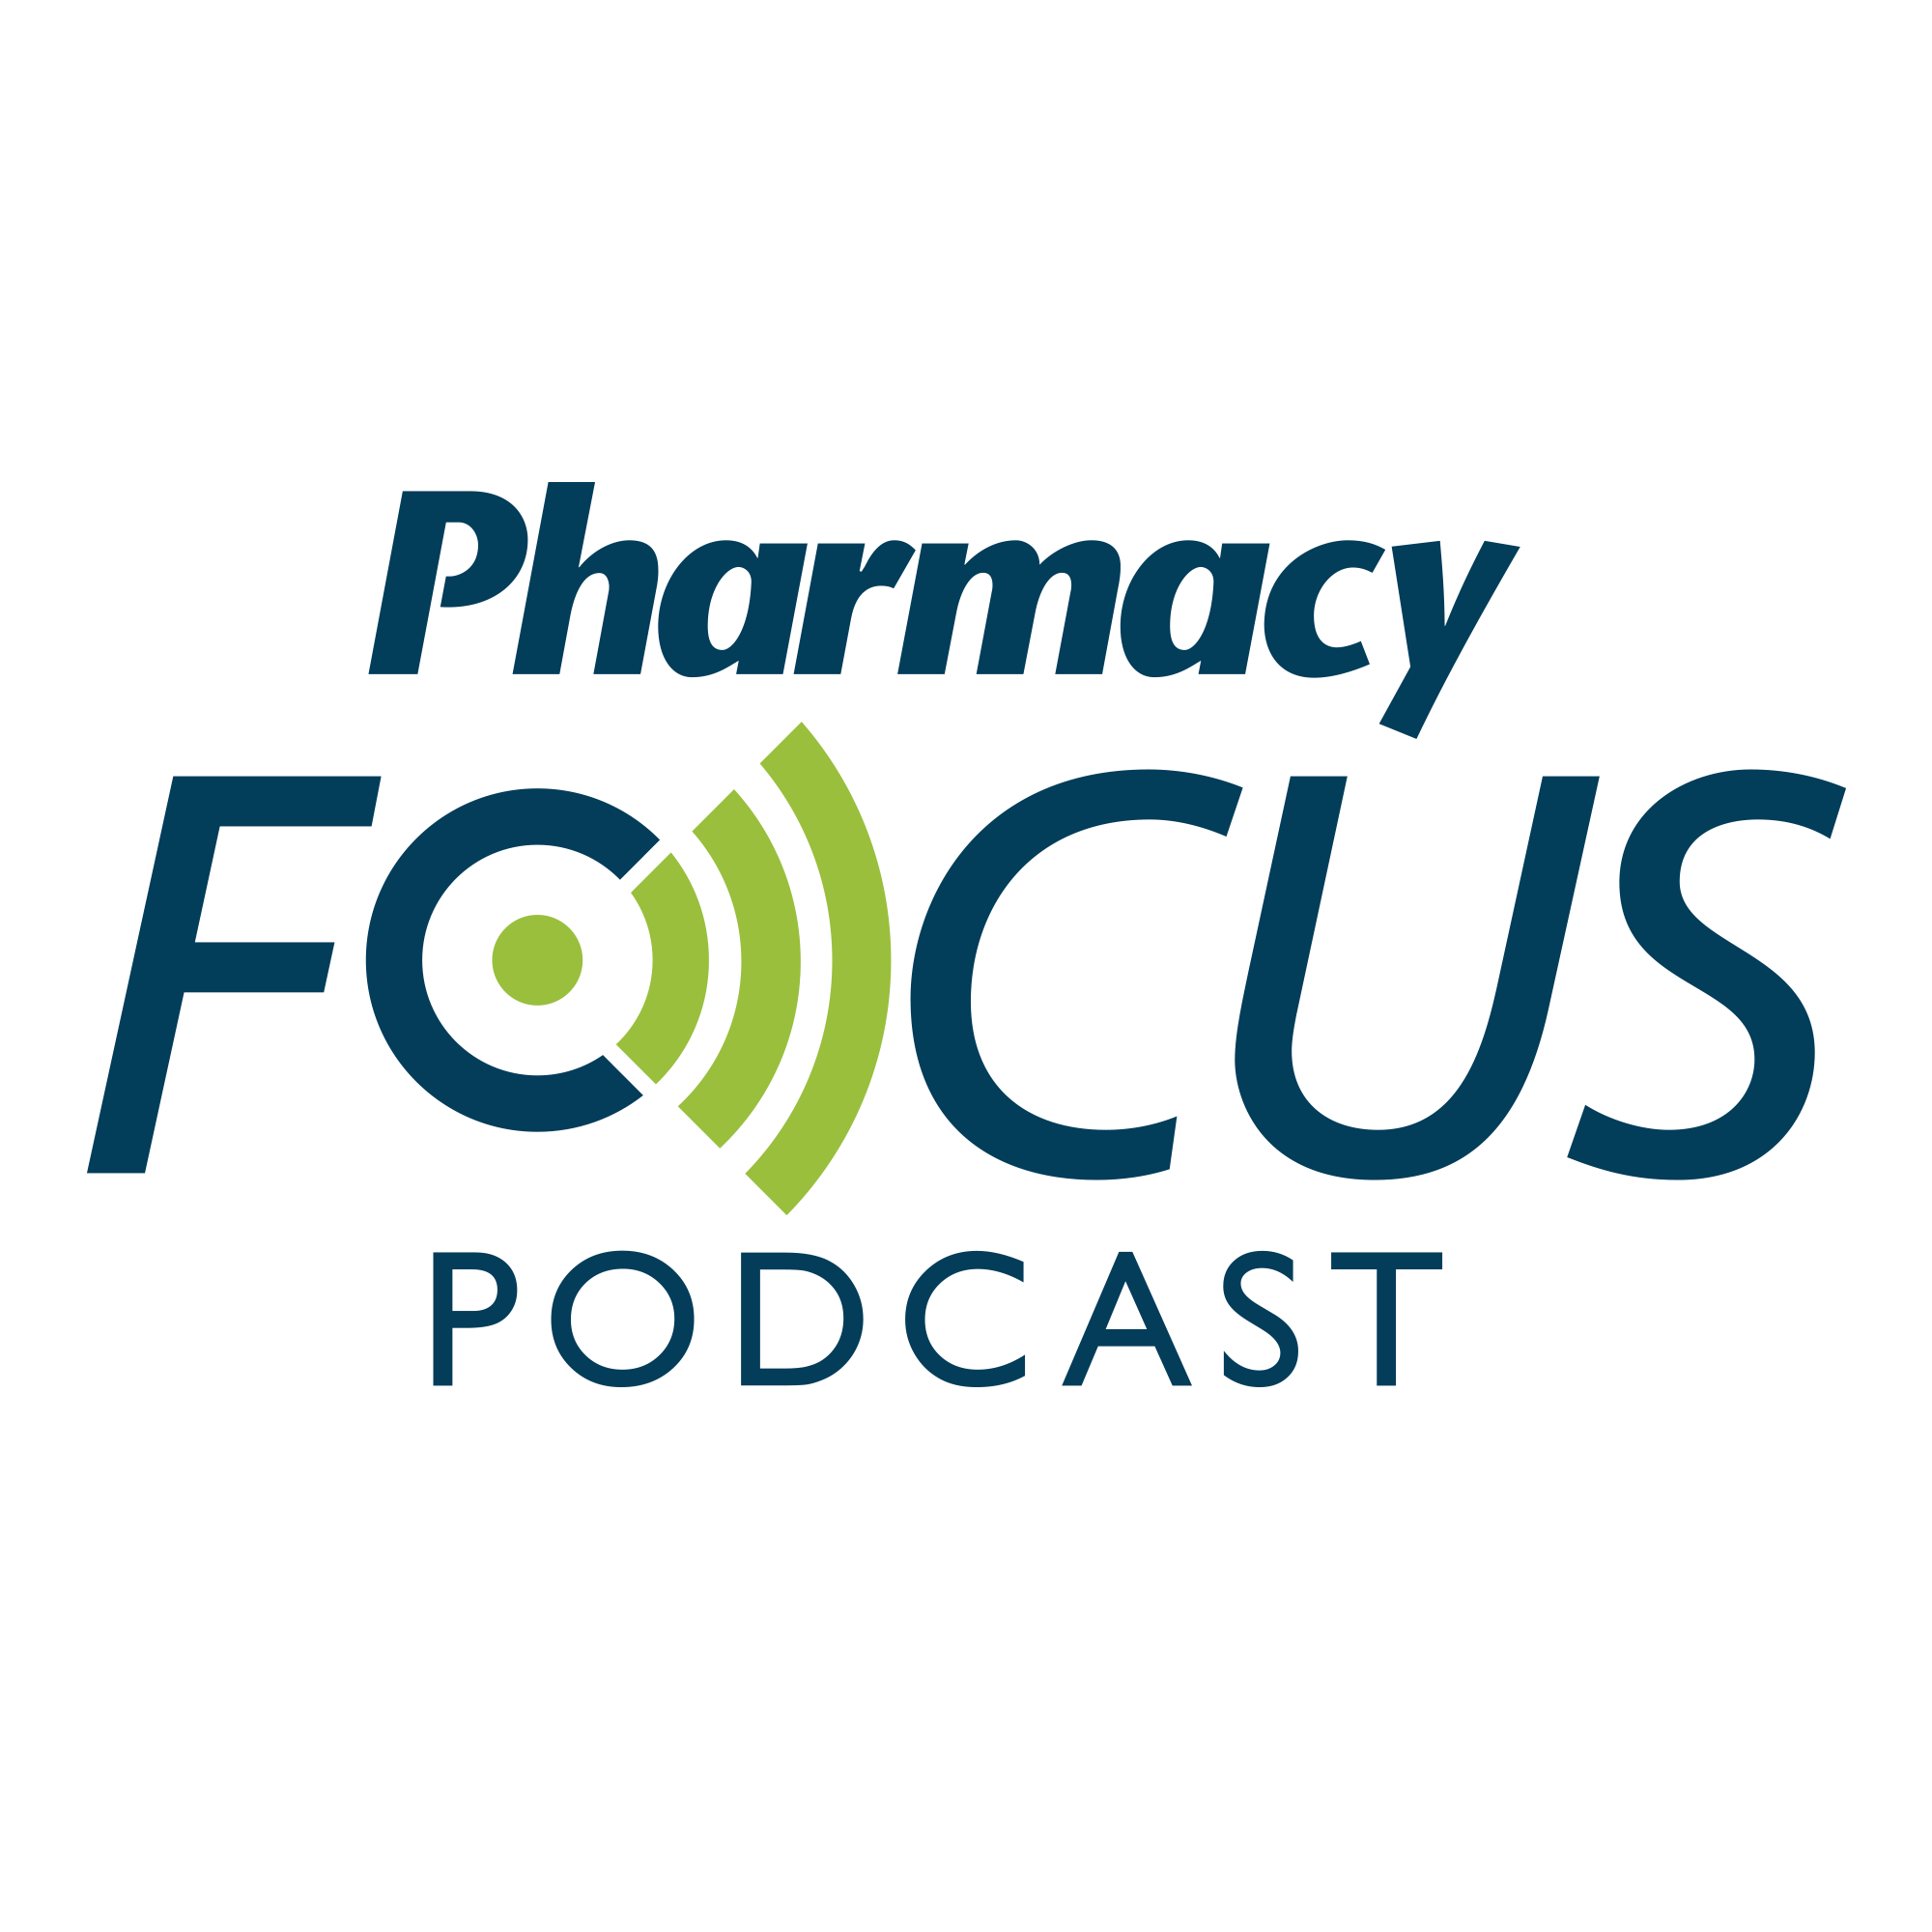 Pharmacy Focus: Turning the Tide On Obesity